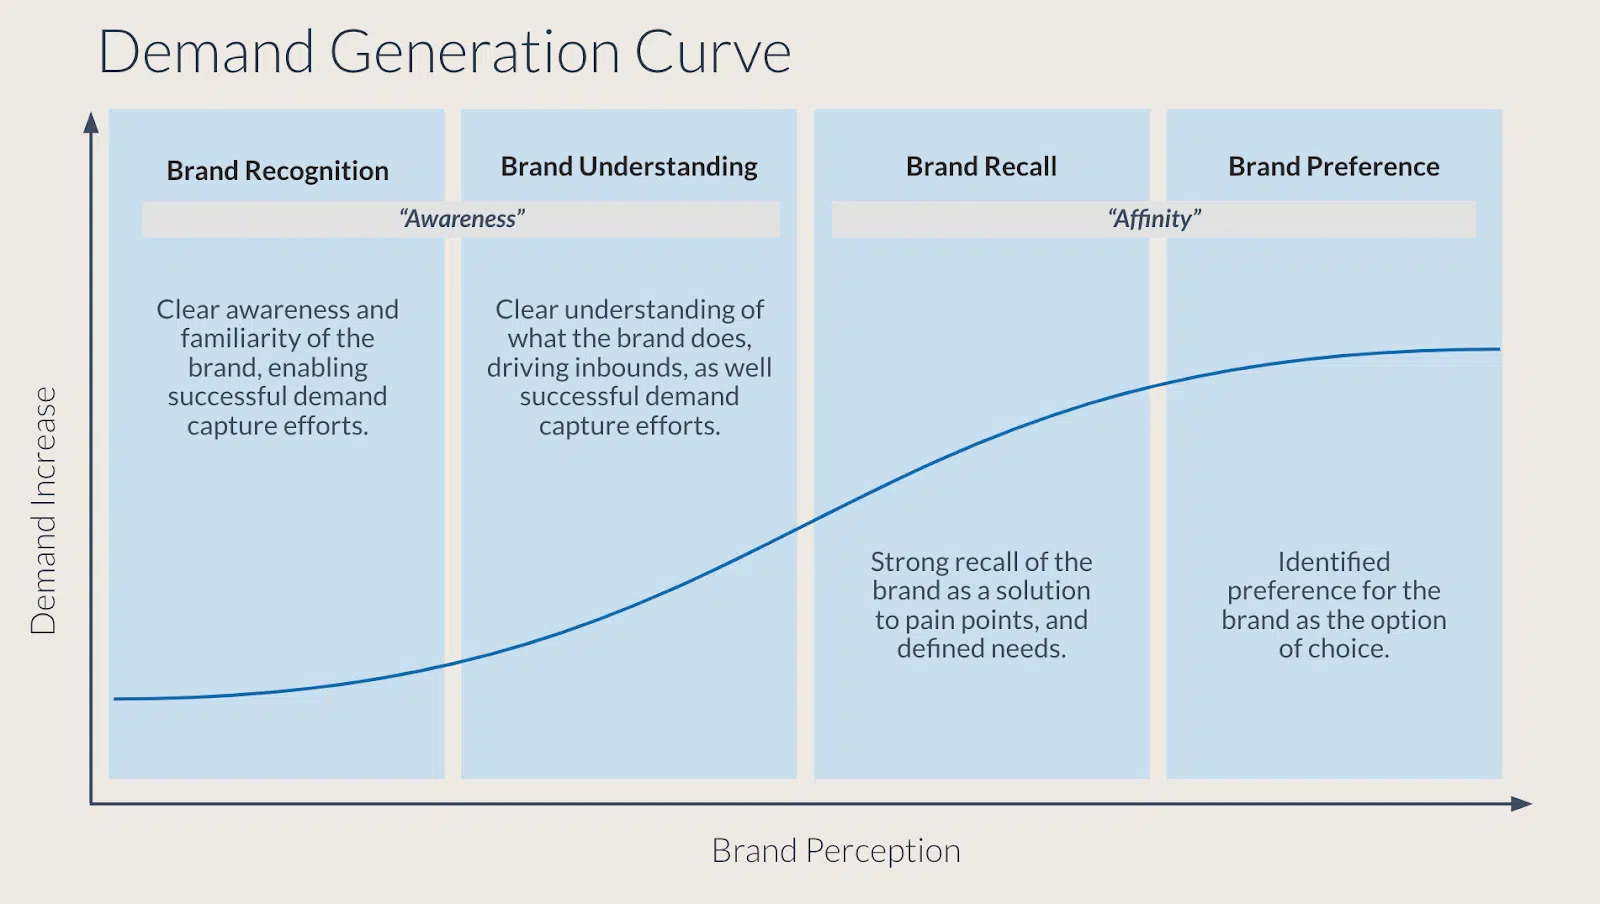 The demand generation curve